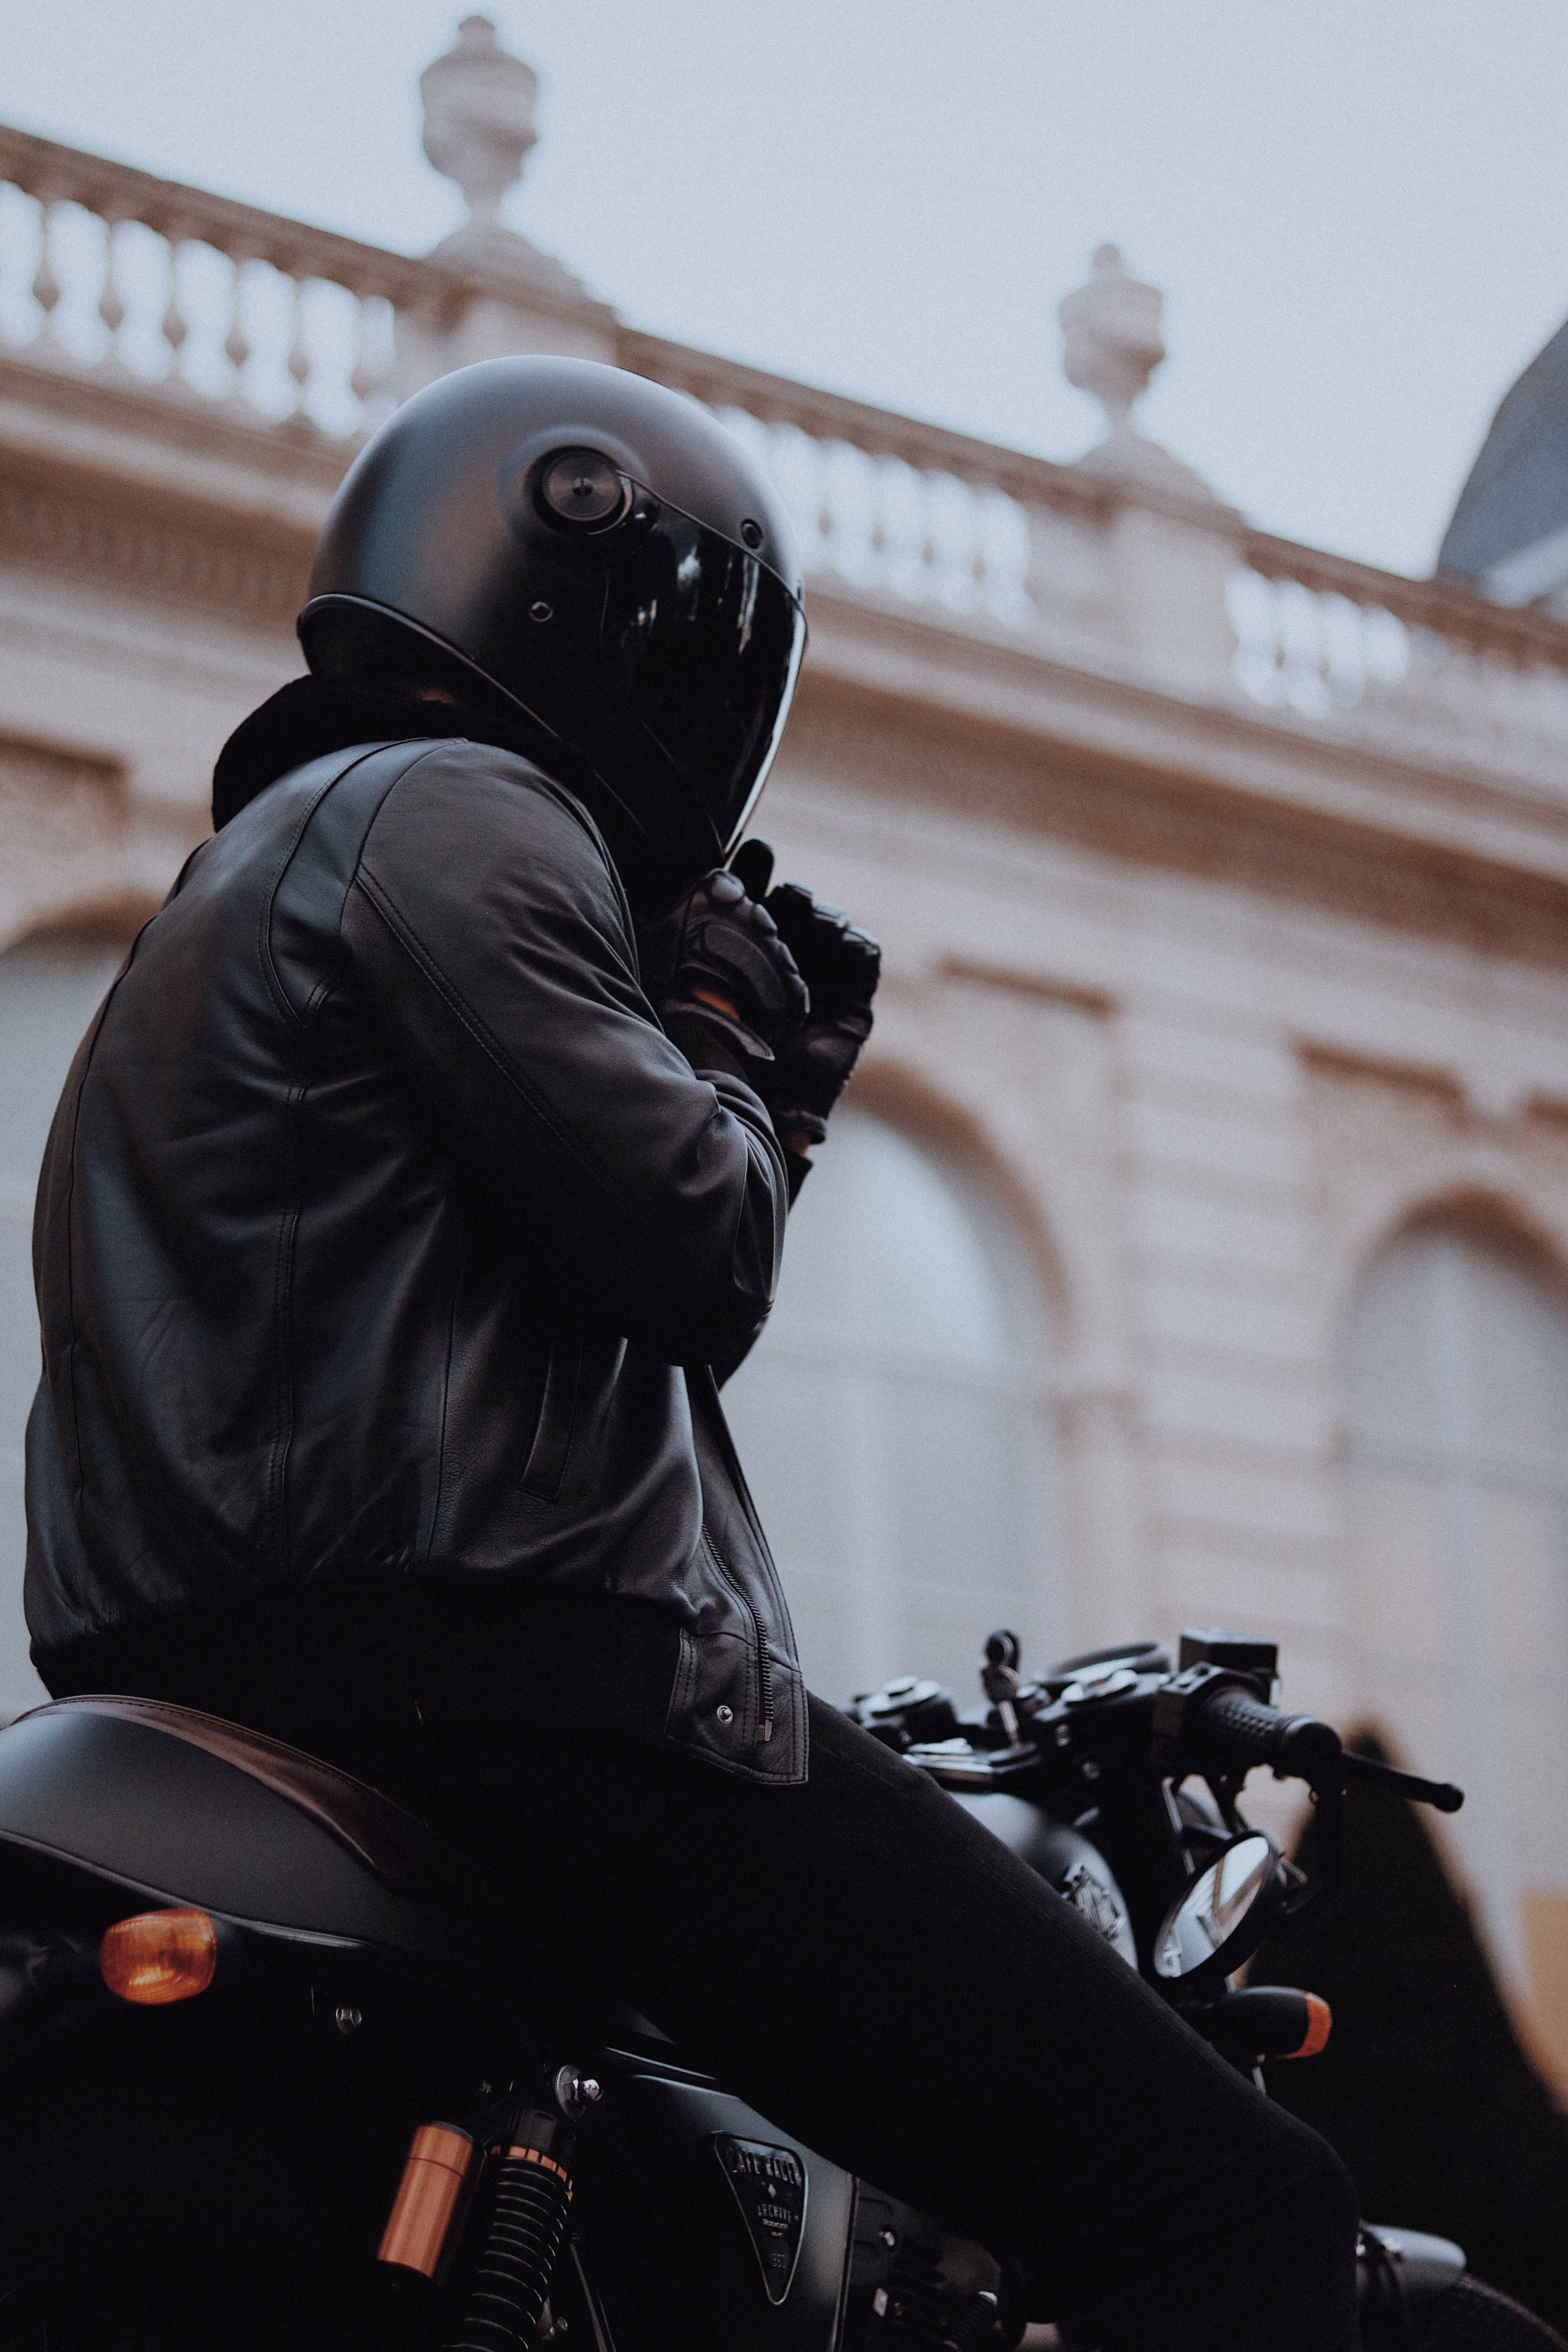 helmet, motorcyclist, human, motorcycles, motorcycle, person